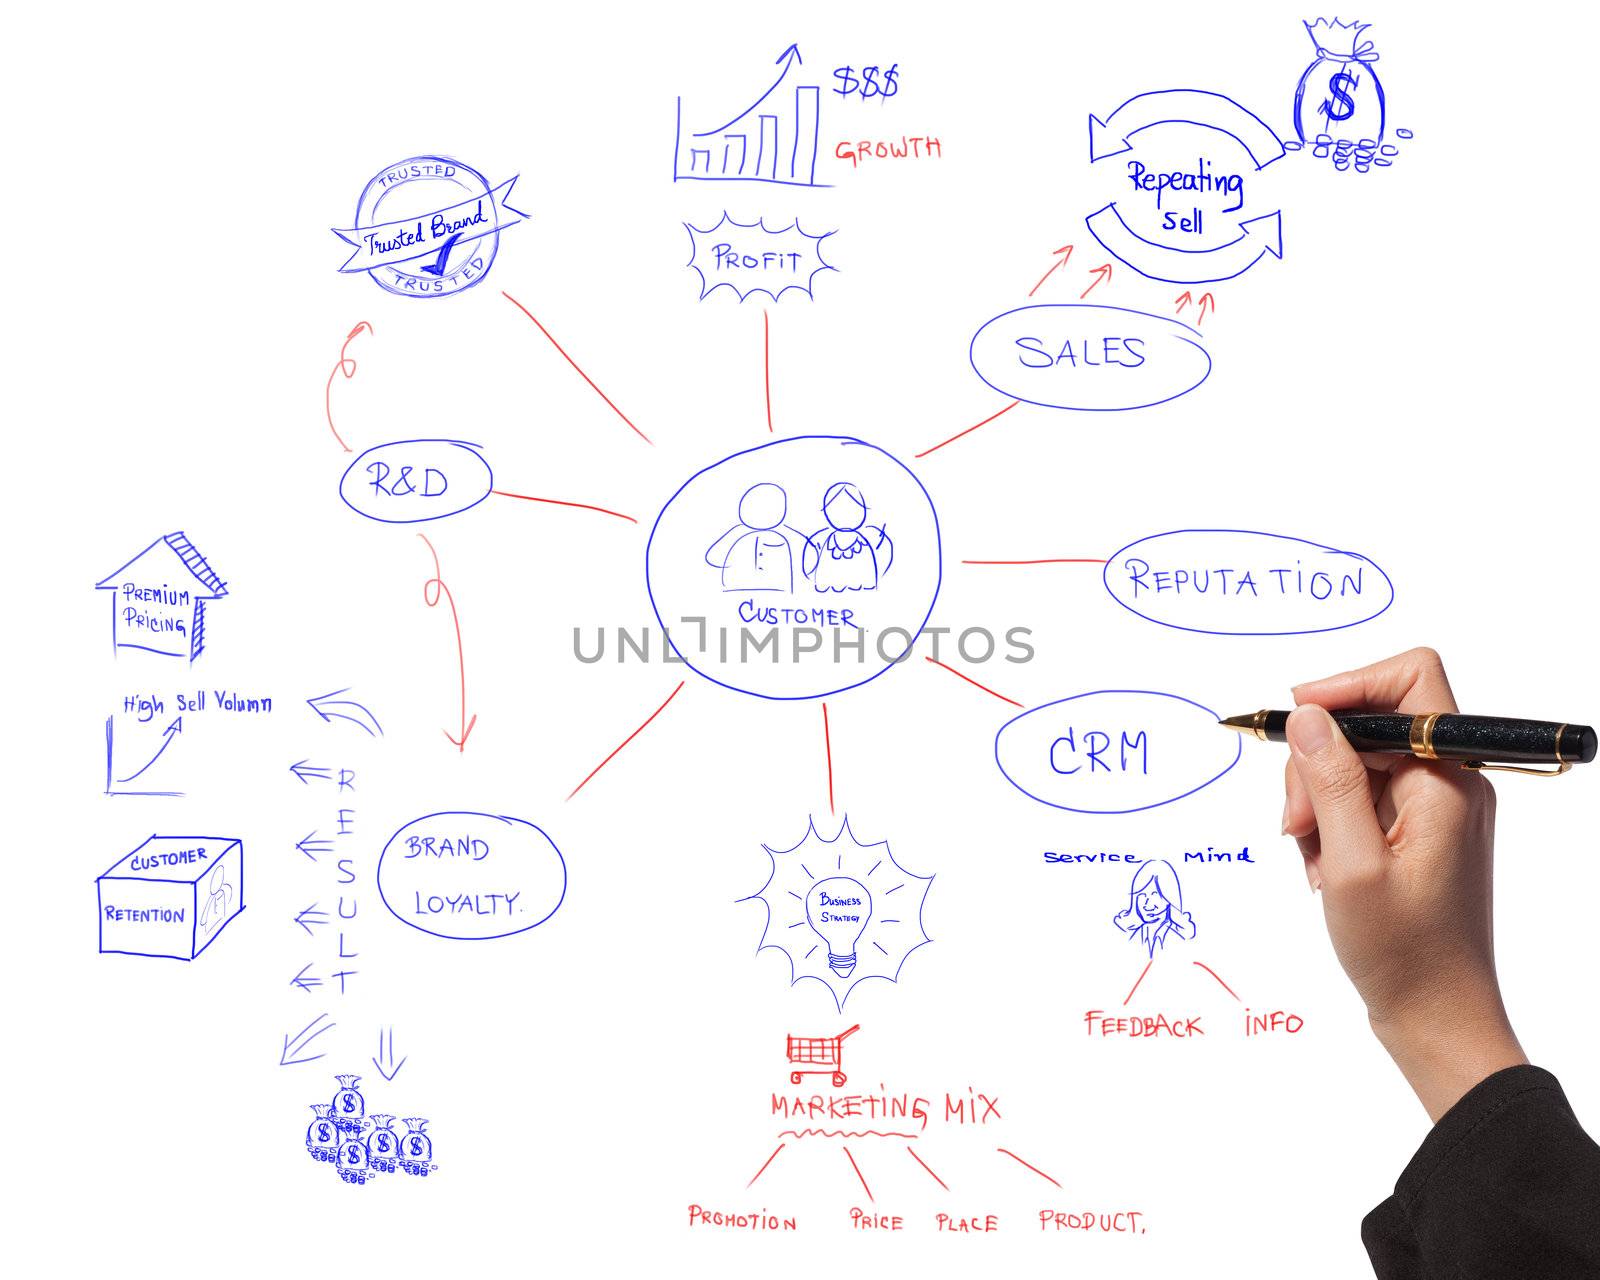 business women drawing idea board of business process diagram by Suriyaphoto